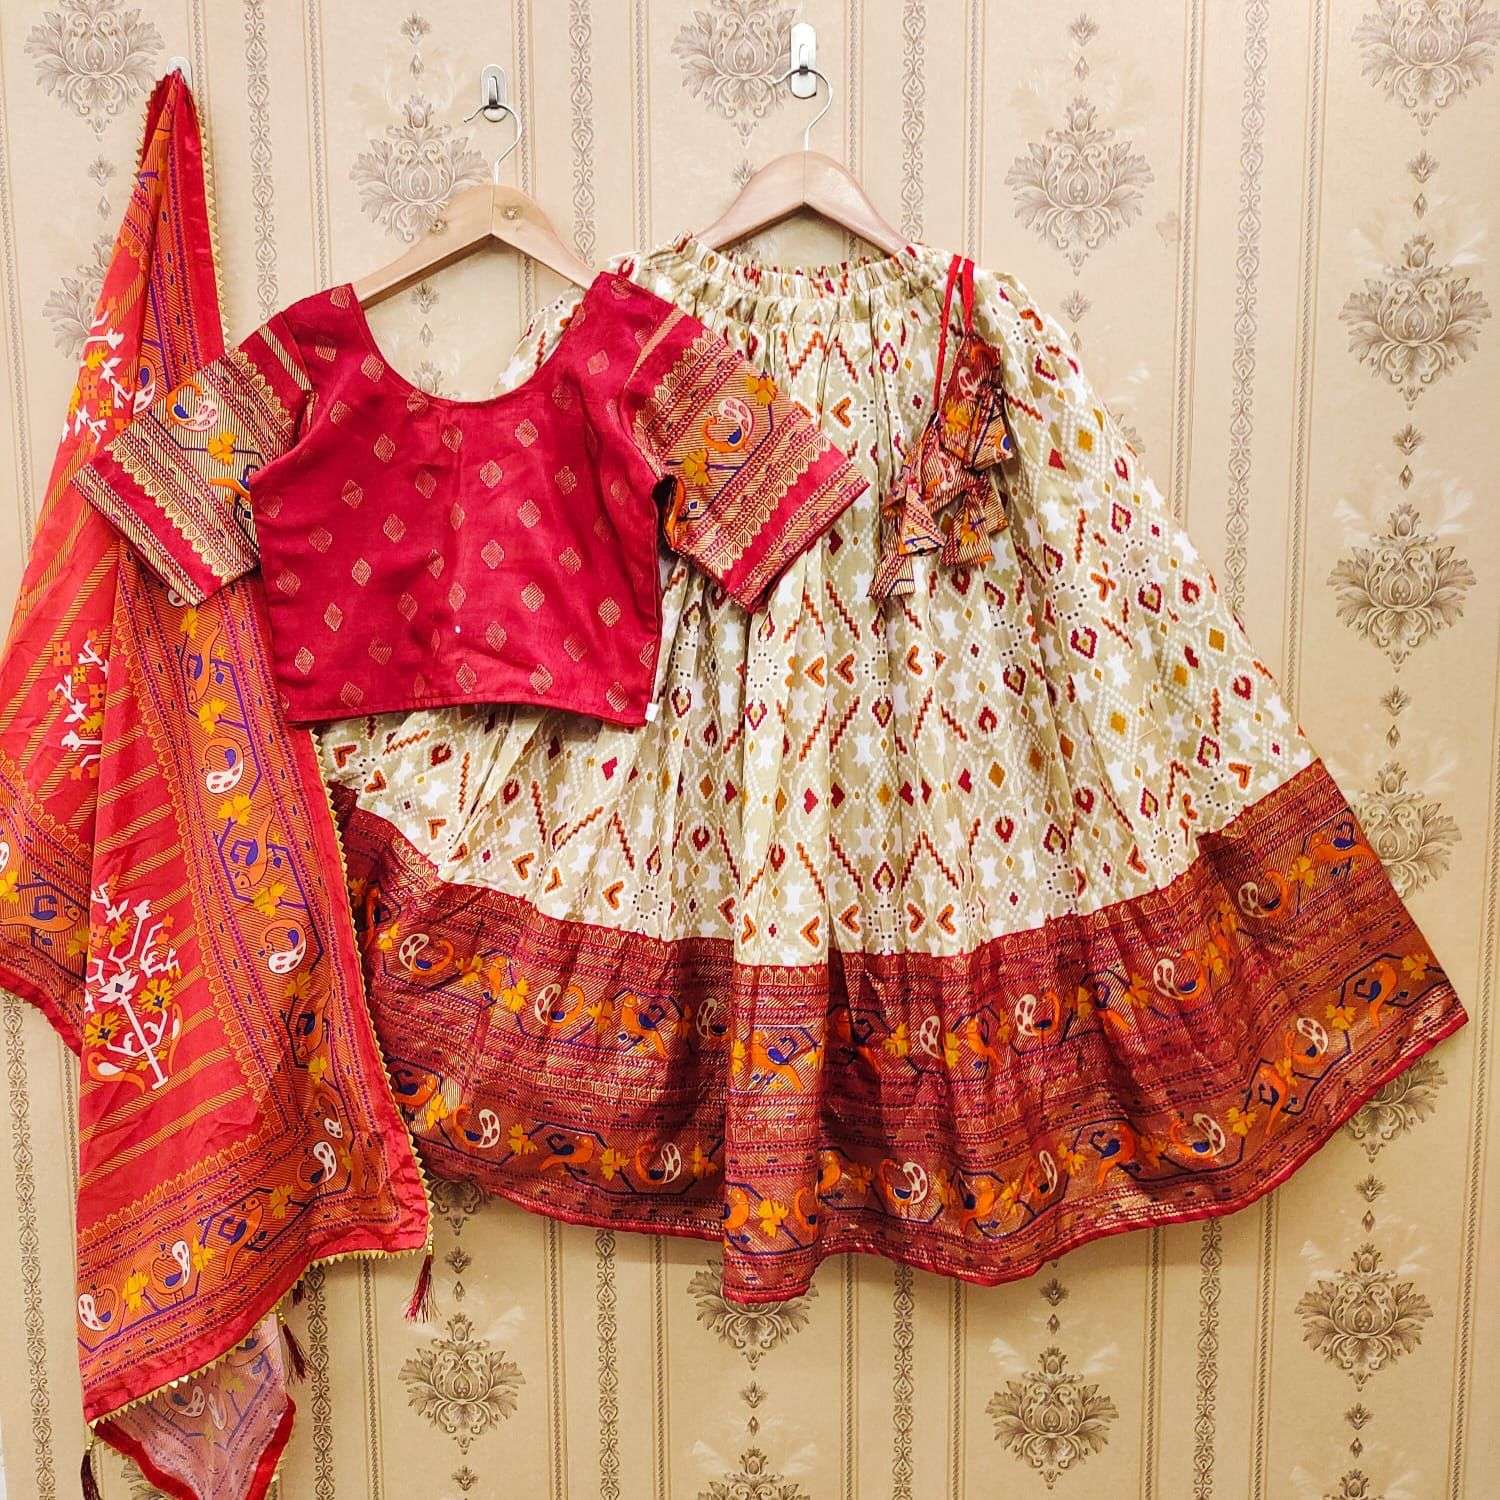 Shop Sleeve girls-kids-wear, Full Sleeve Online at IndianClothStore.com